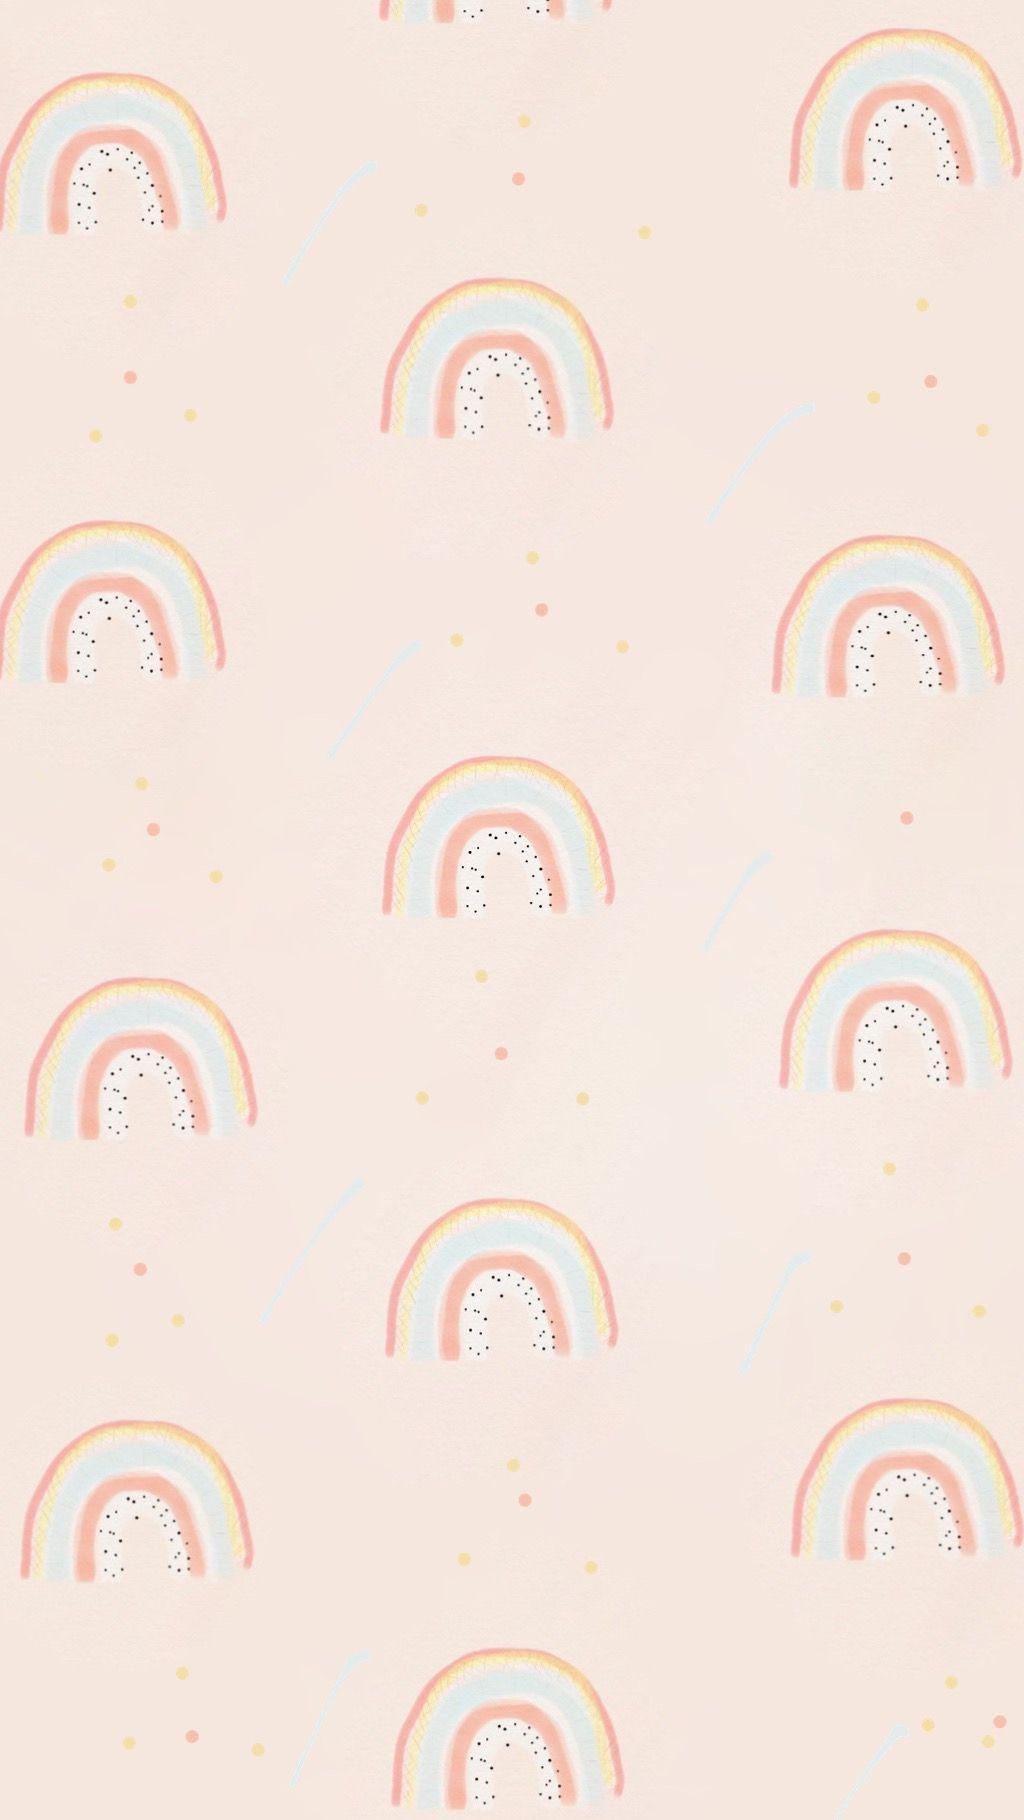 Minimalist Rainbow Wallpapers - Top Free Minimalist Rainbow Backgrounds ...